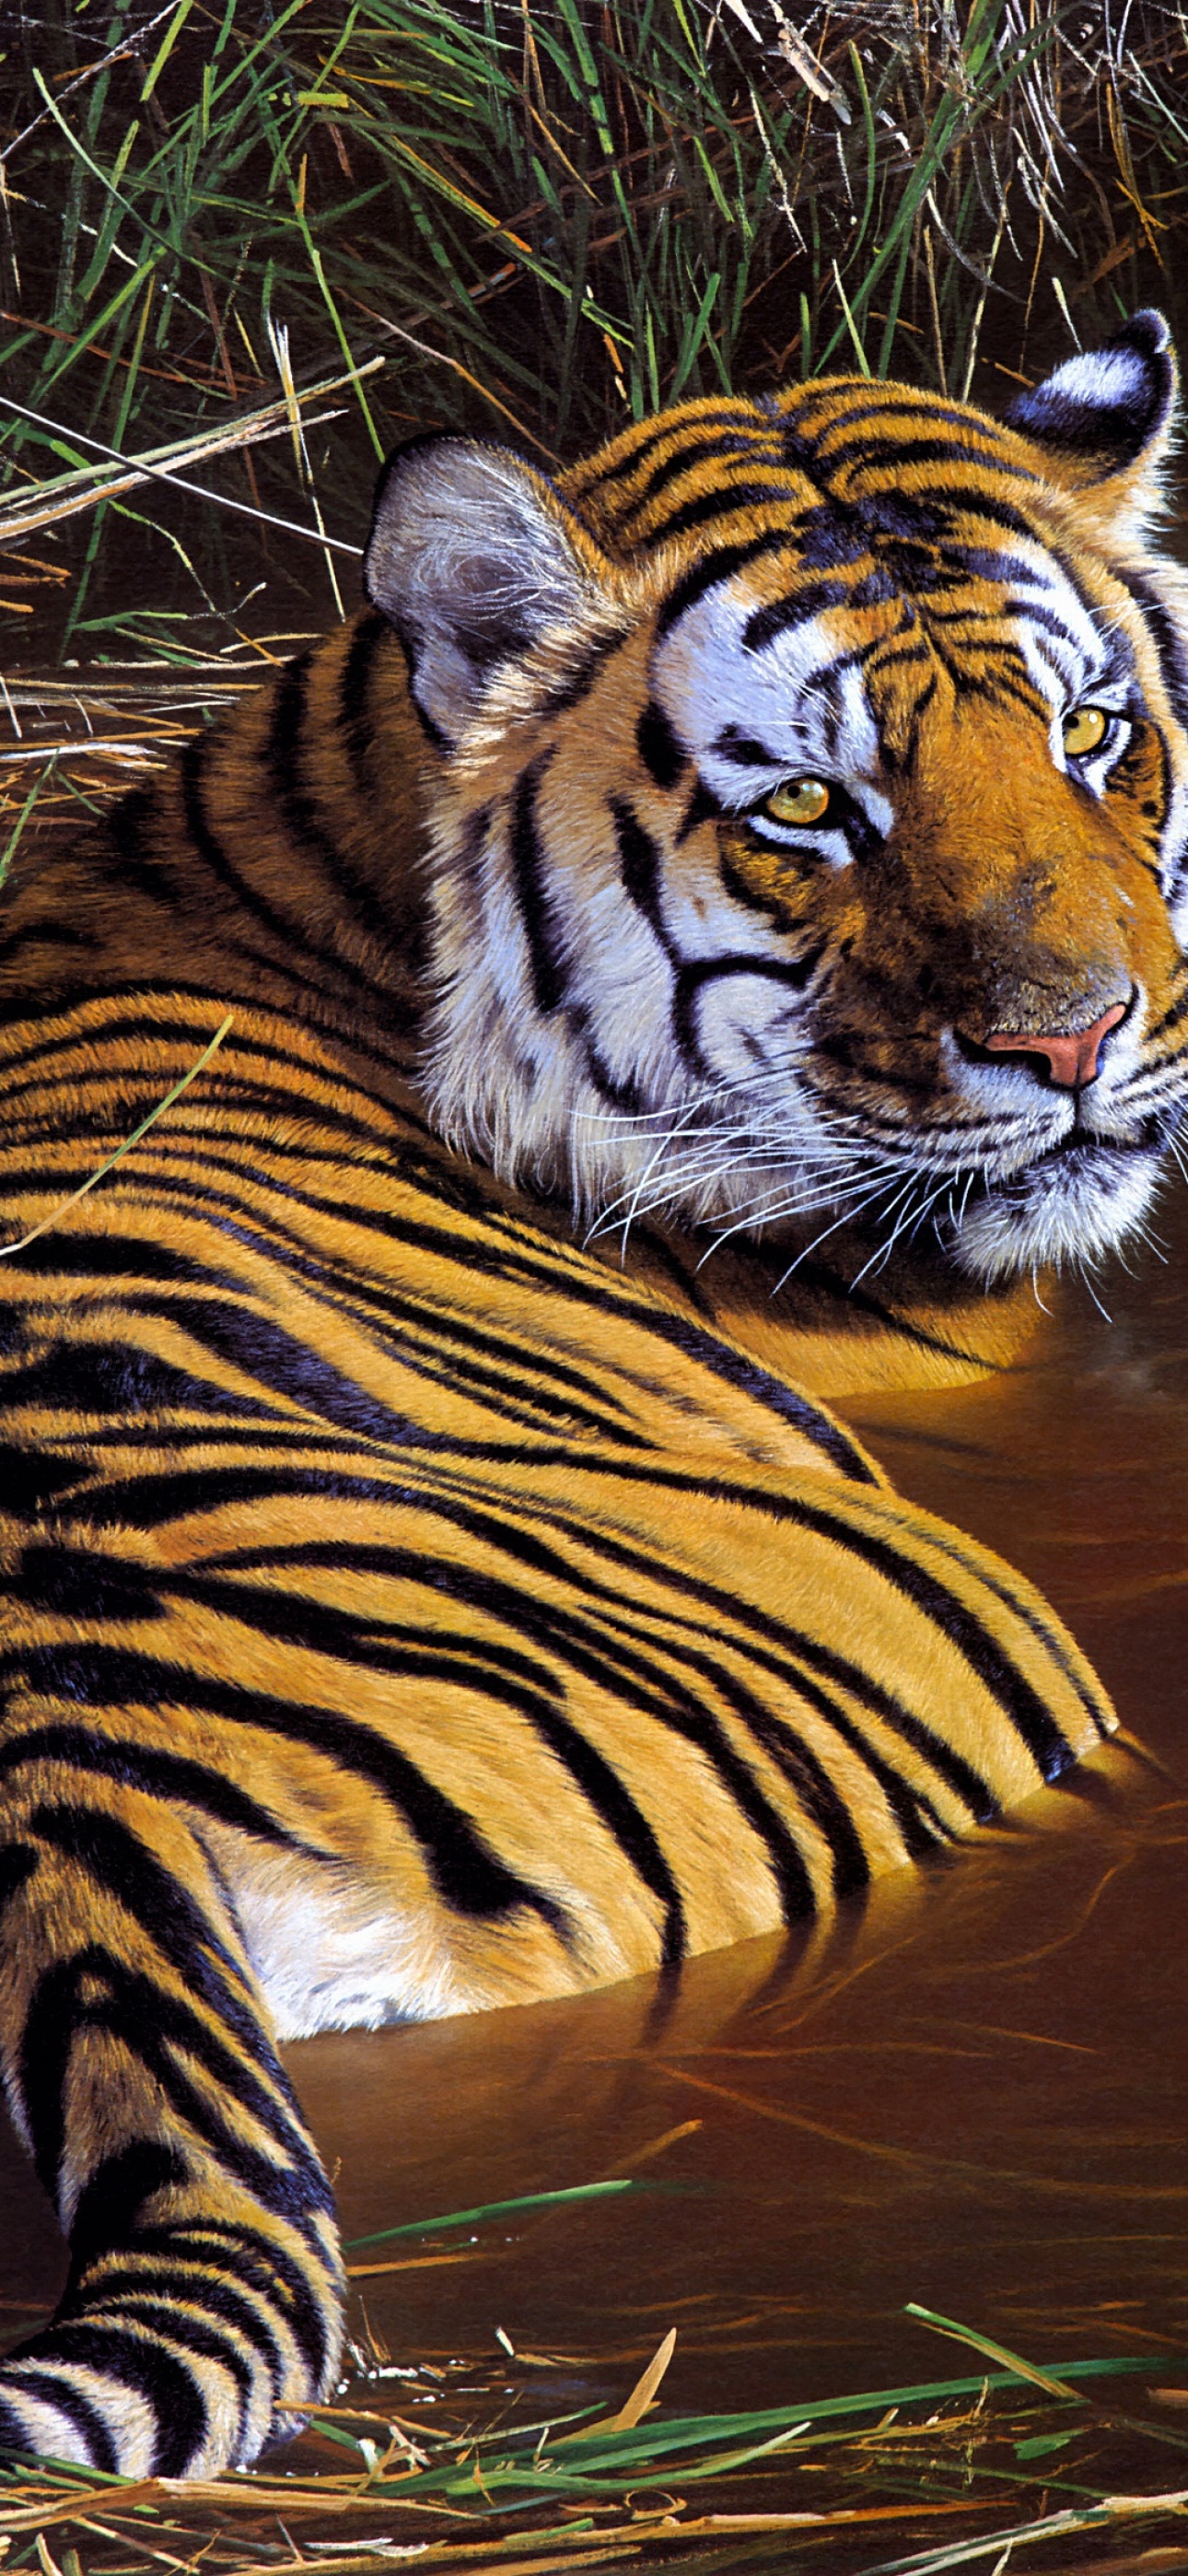 Tiger wallpaper 4k, tiger images hd